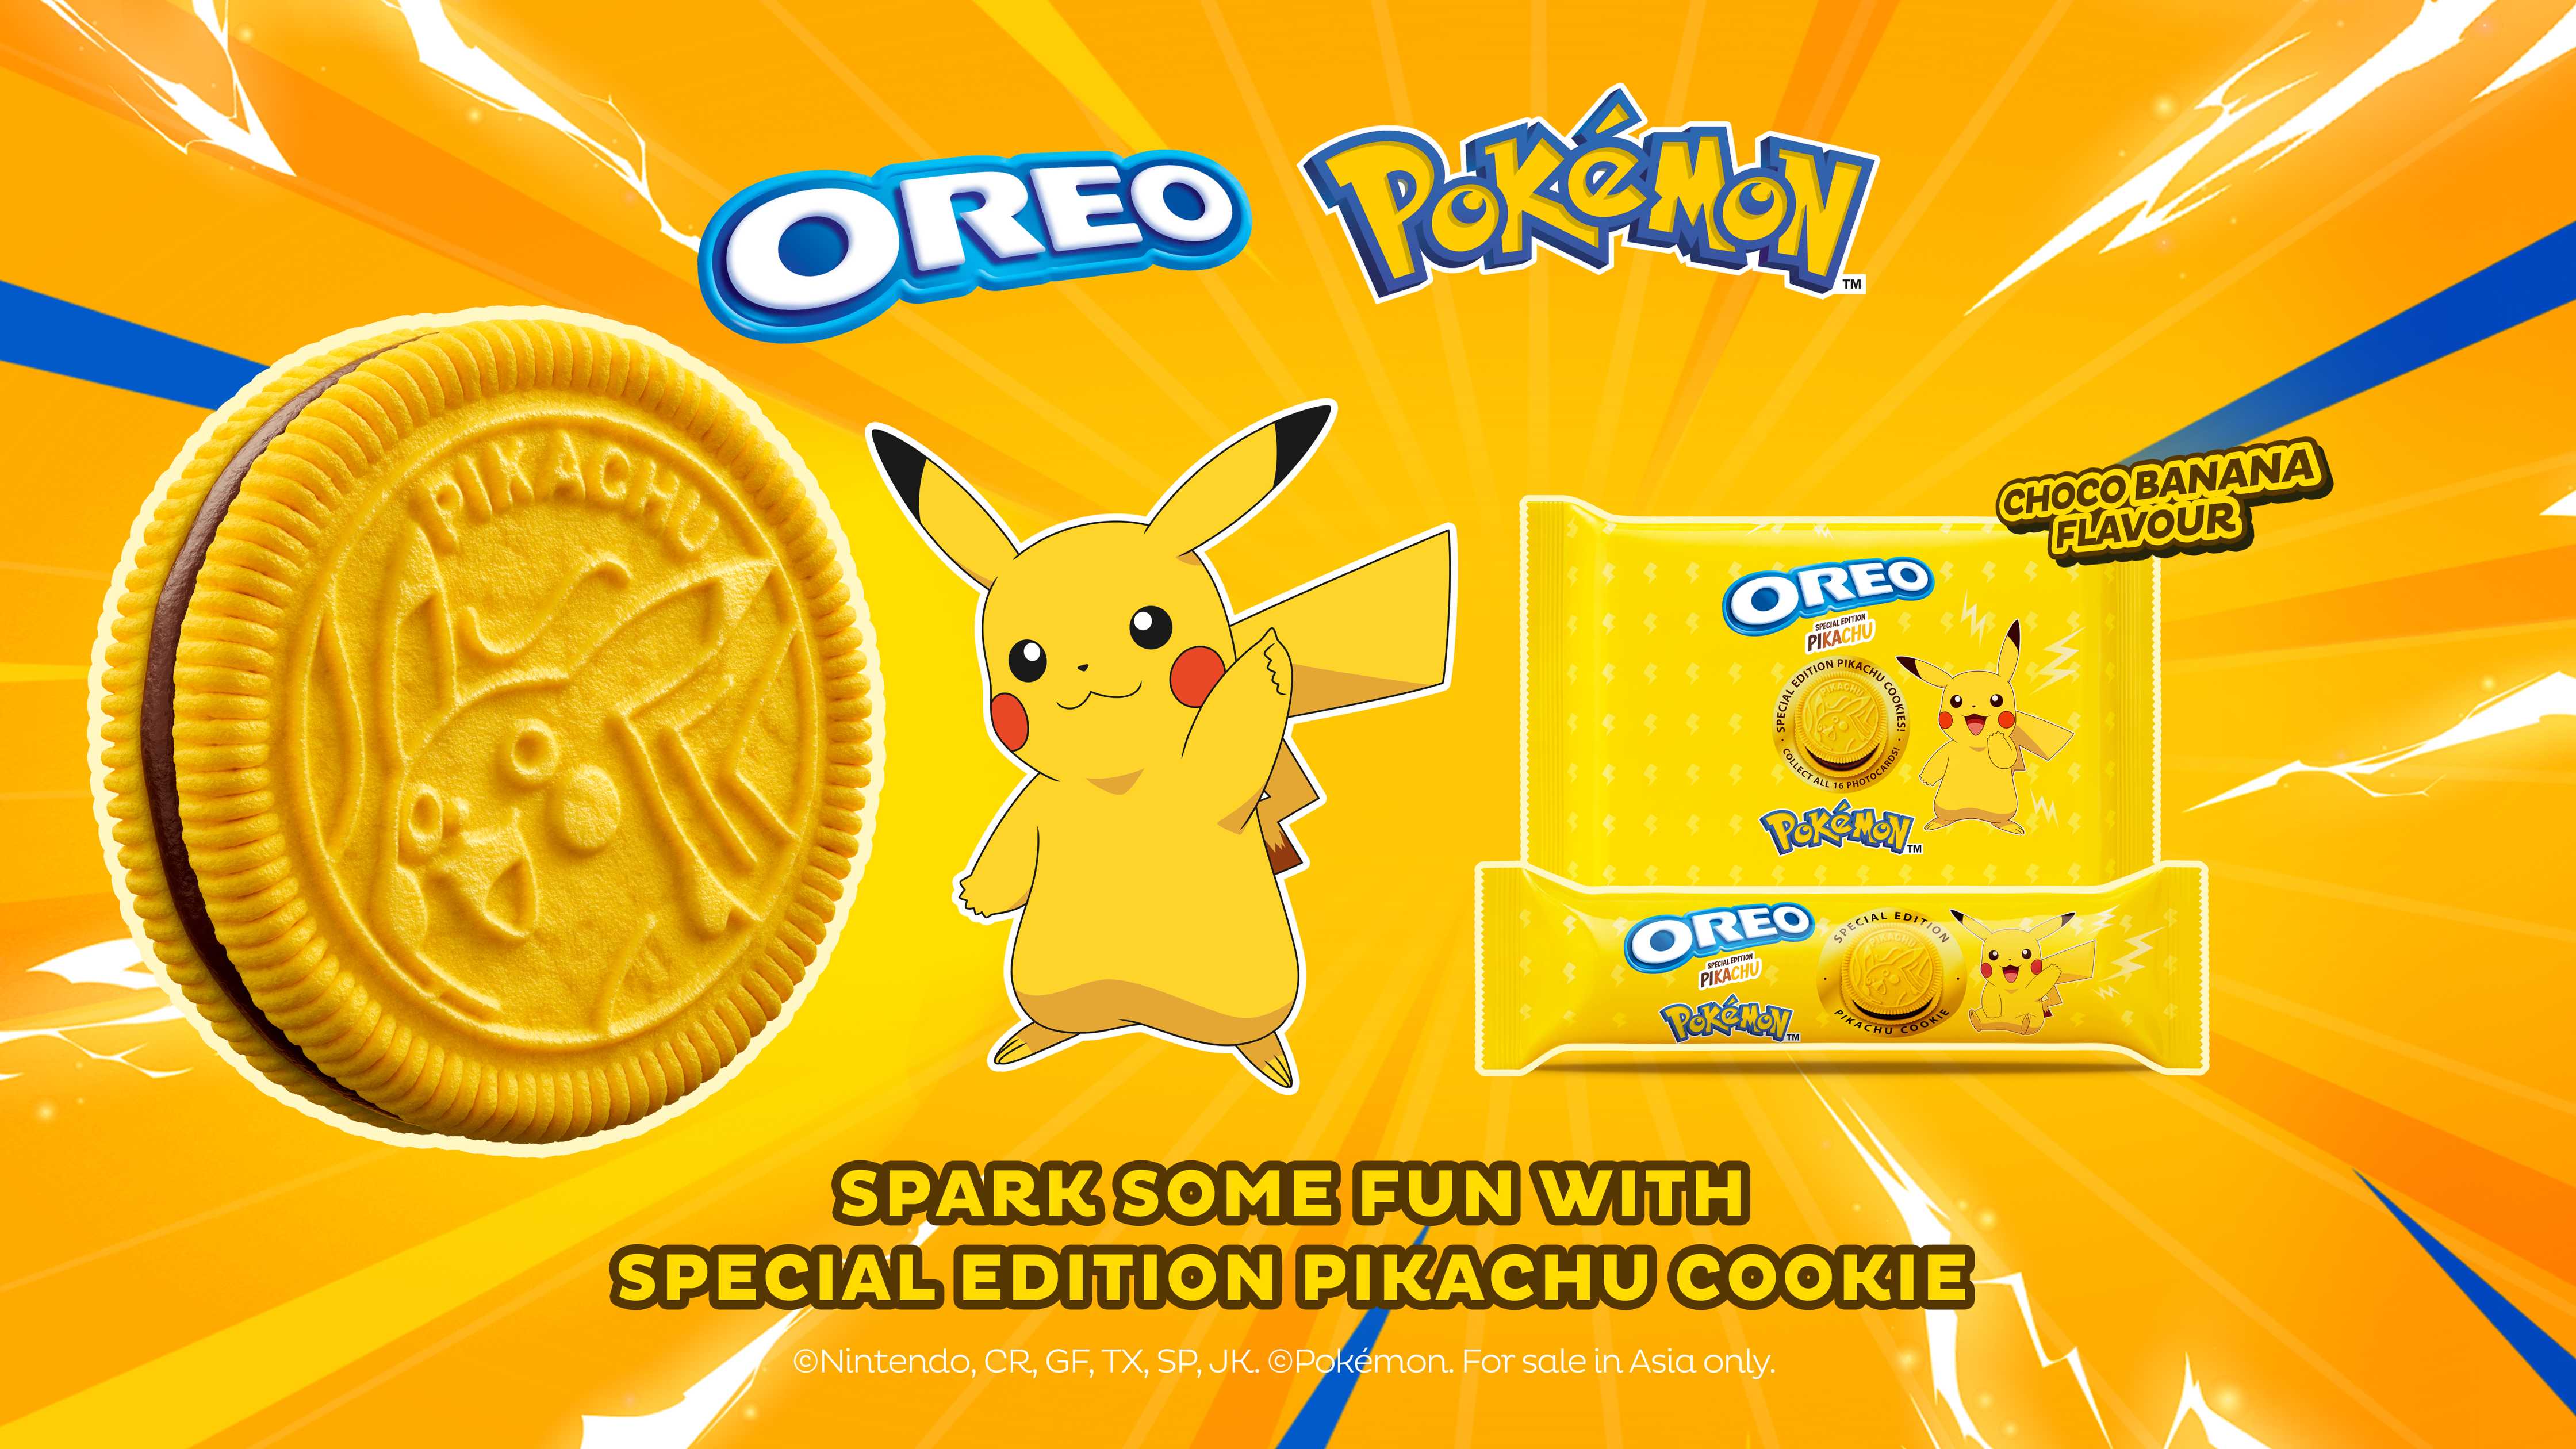 Pokemon Pikachu Oreo Chocolate & Banana 1 Roll!! (120g)